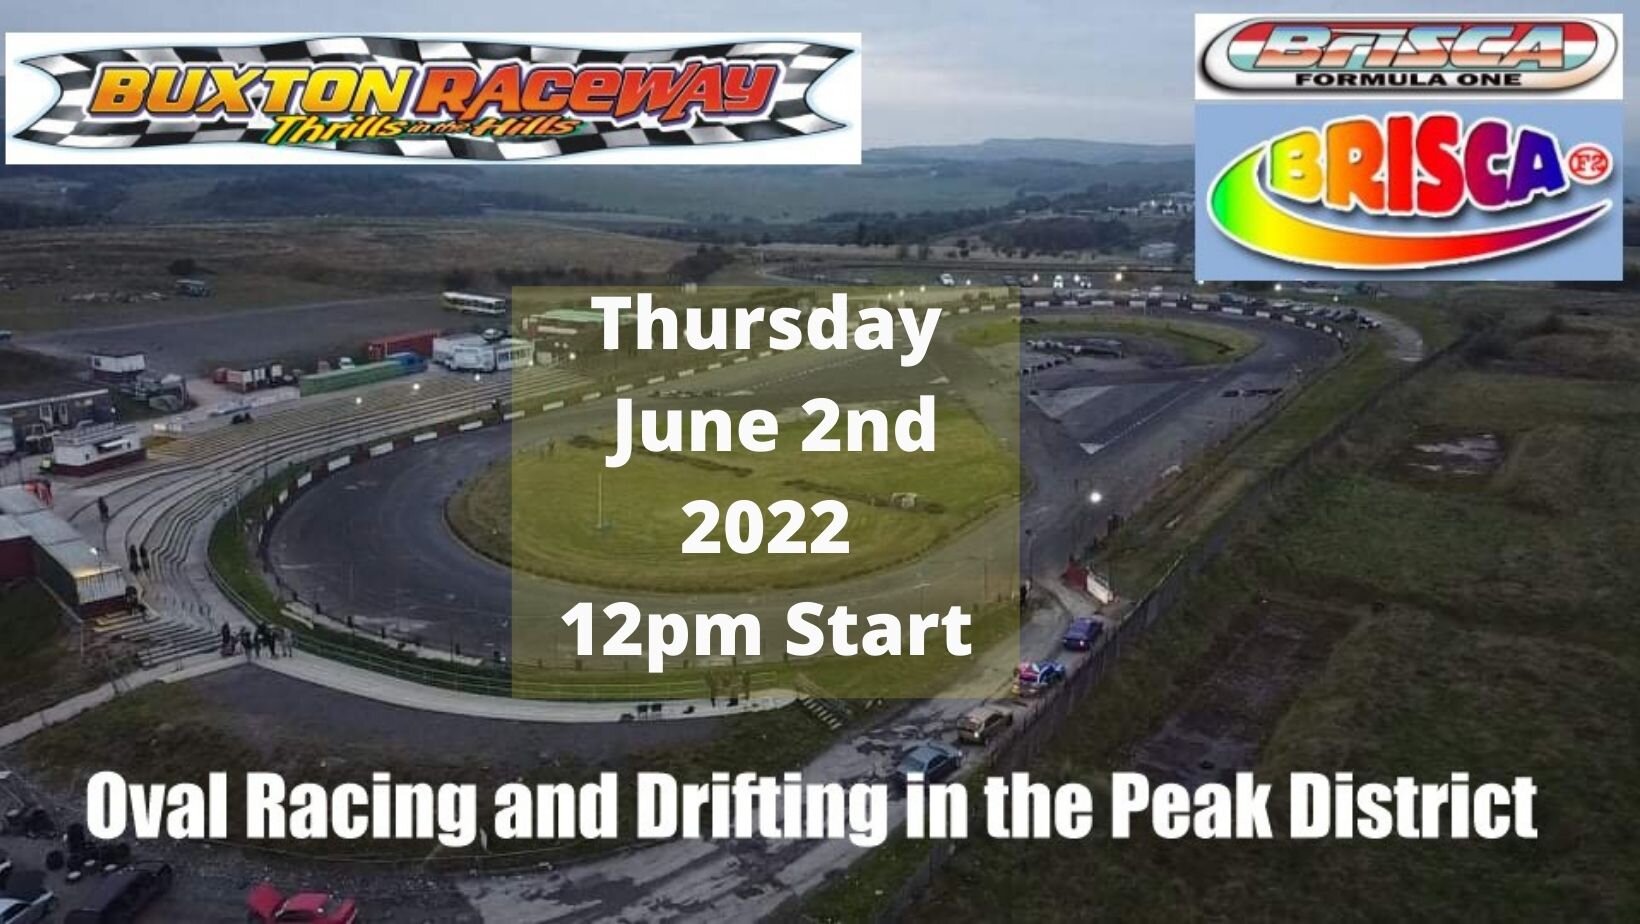 Buxton Raceway | Thursday 2nd June 12pm